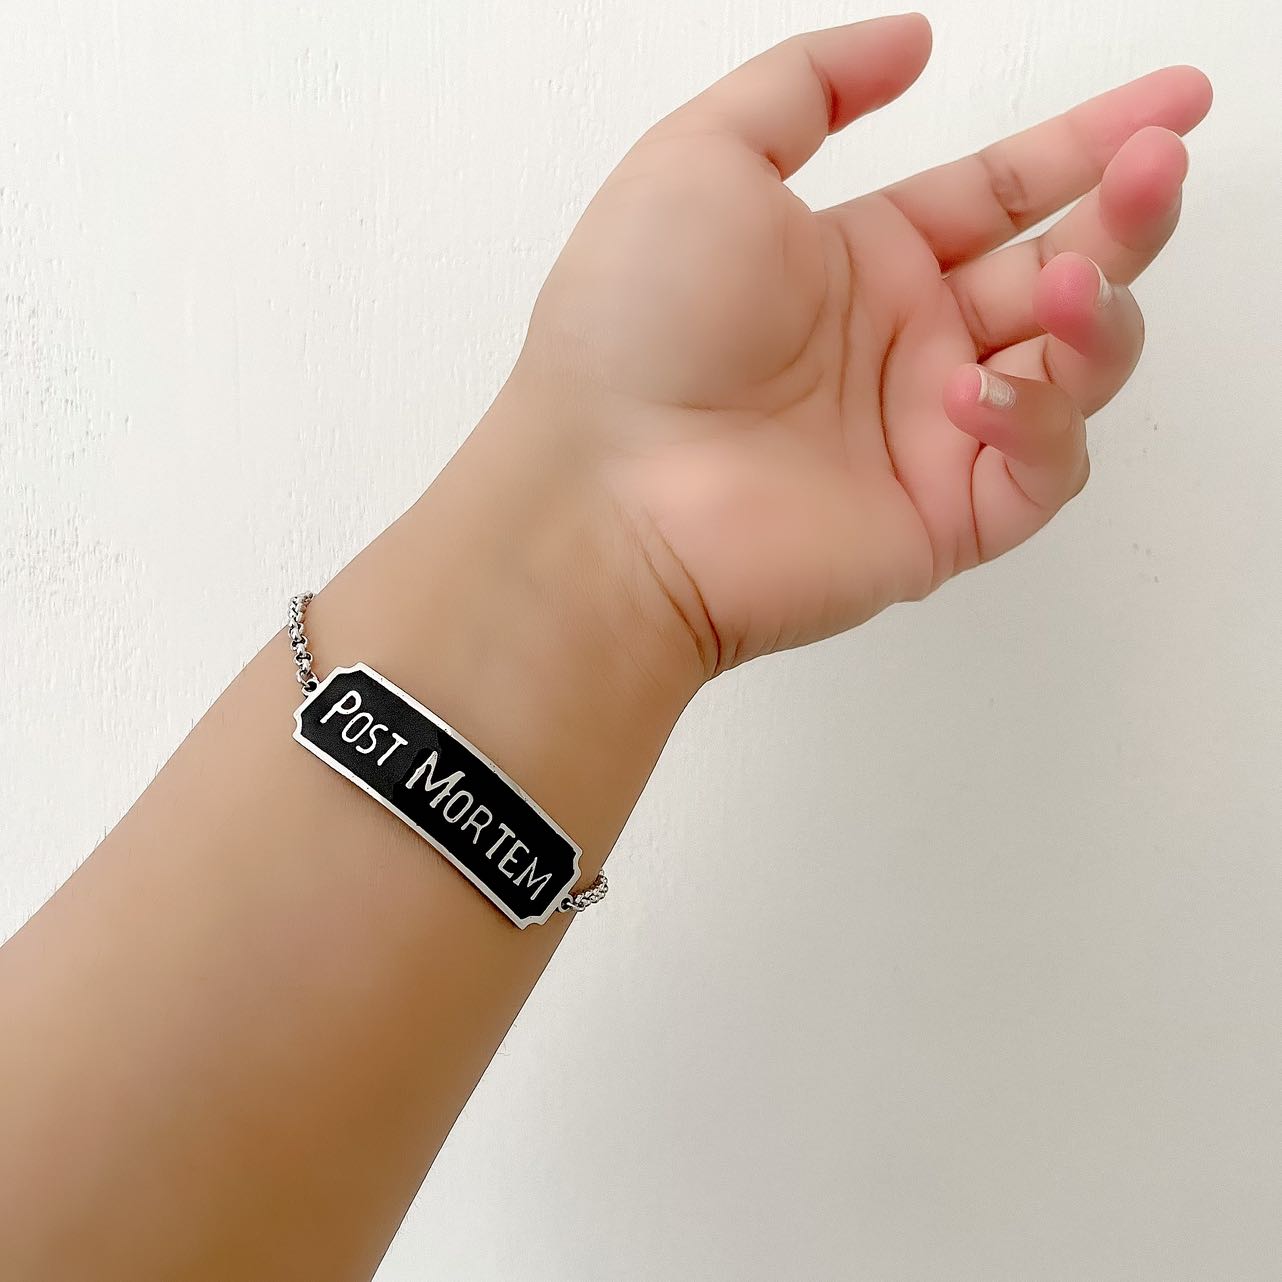 Post Mortem Plaque bracelet